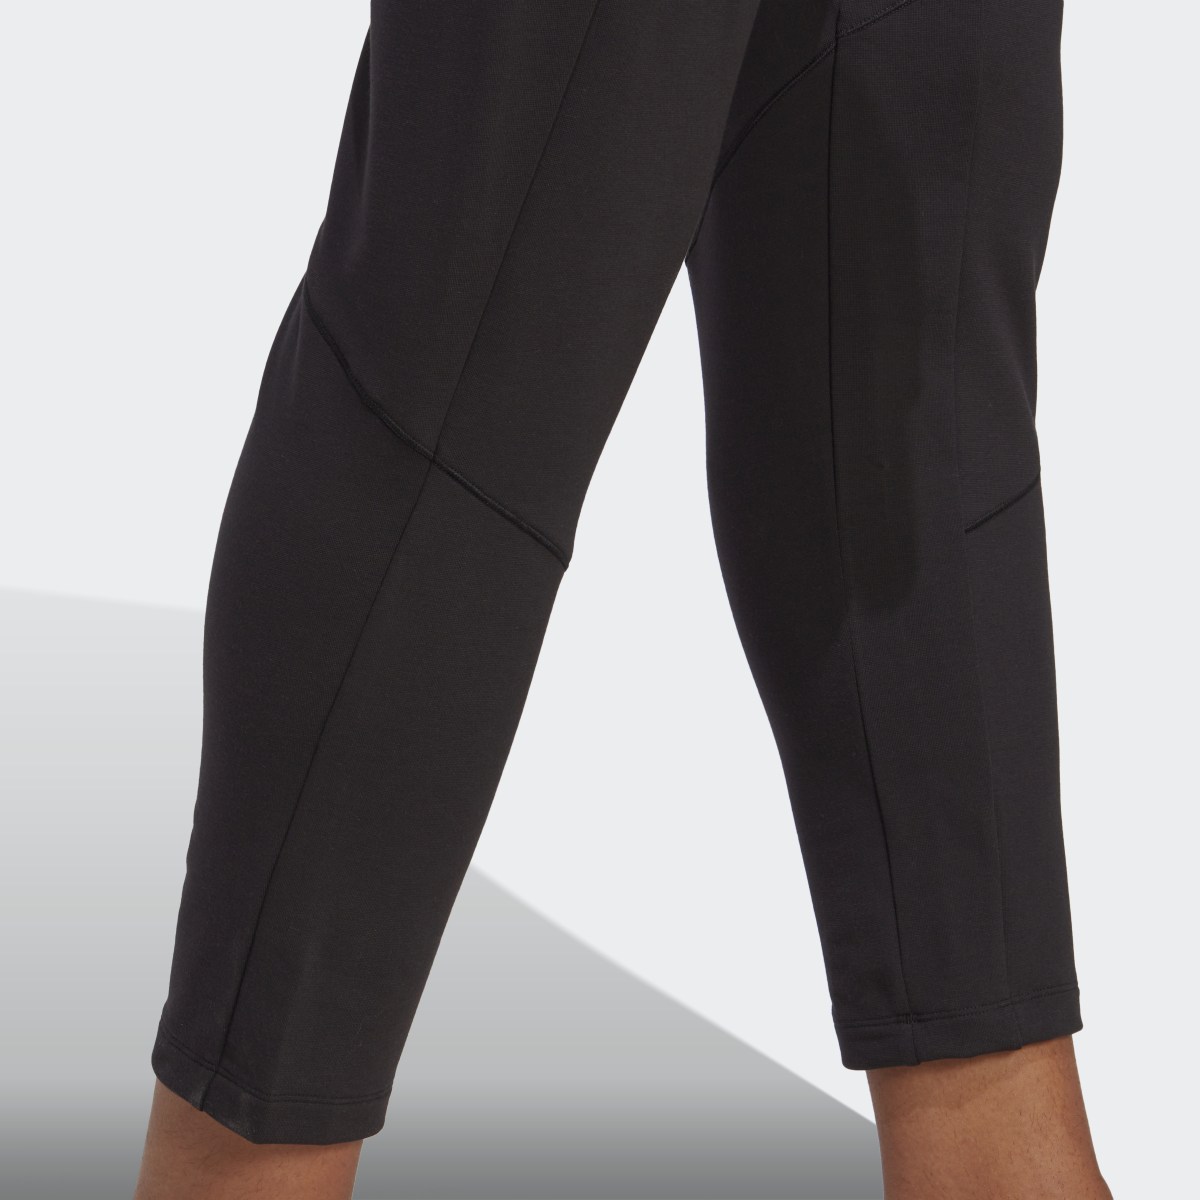 Adidas Pants de Yoga Designed for Training 7/8. 6